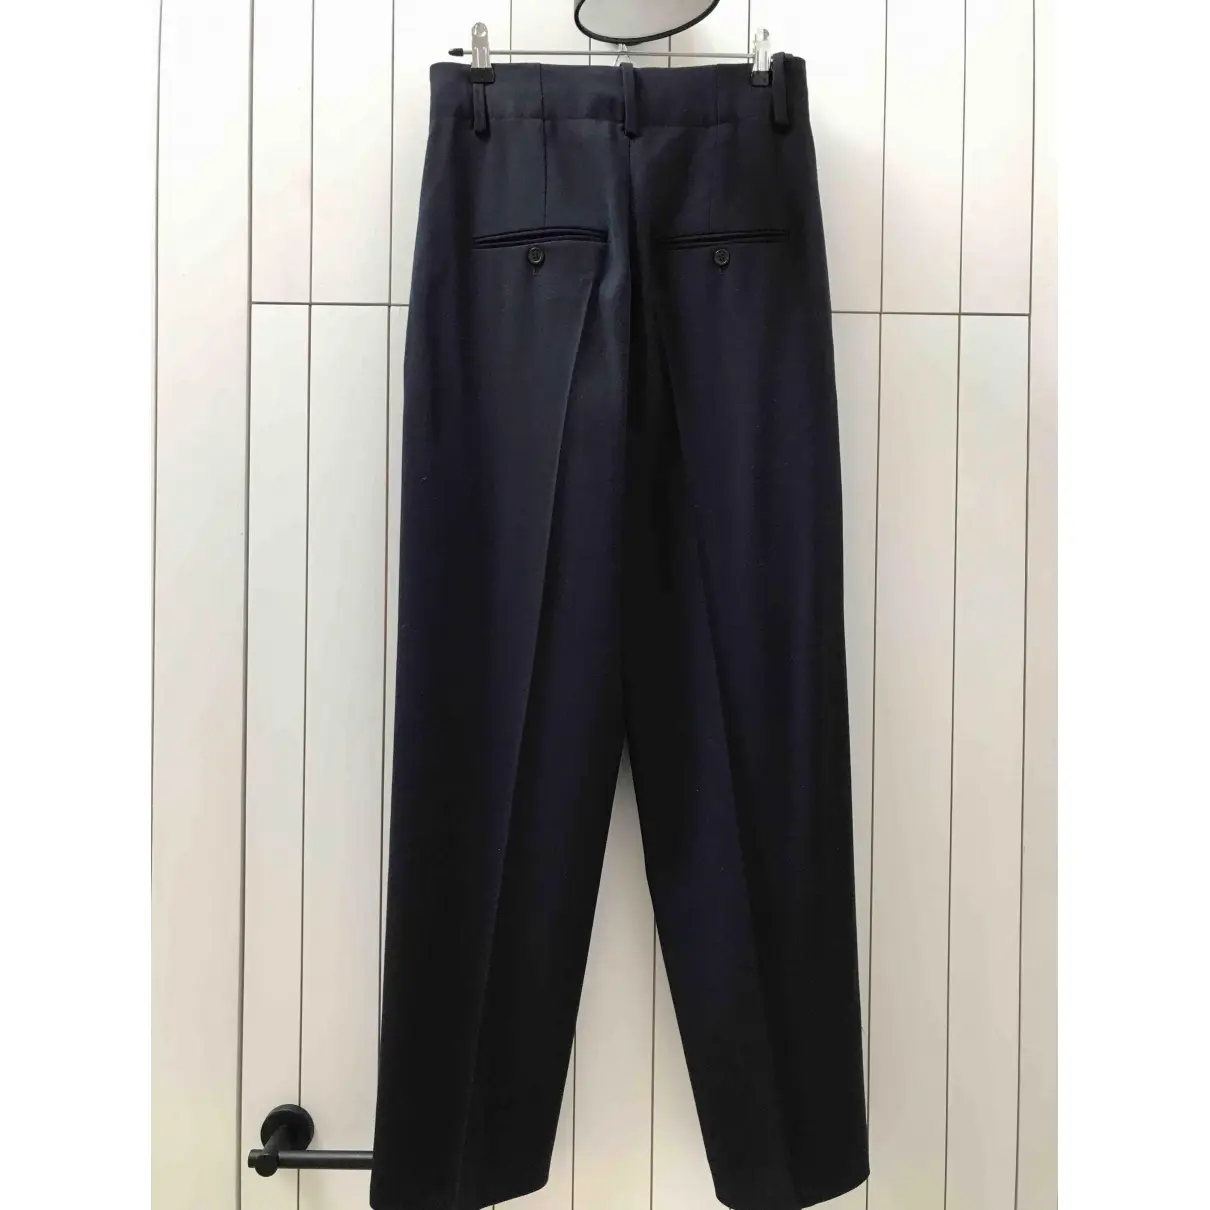 Isabel Marant Large pants for sale